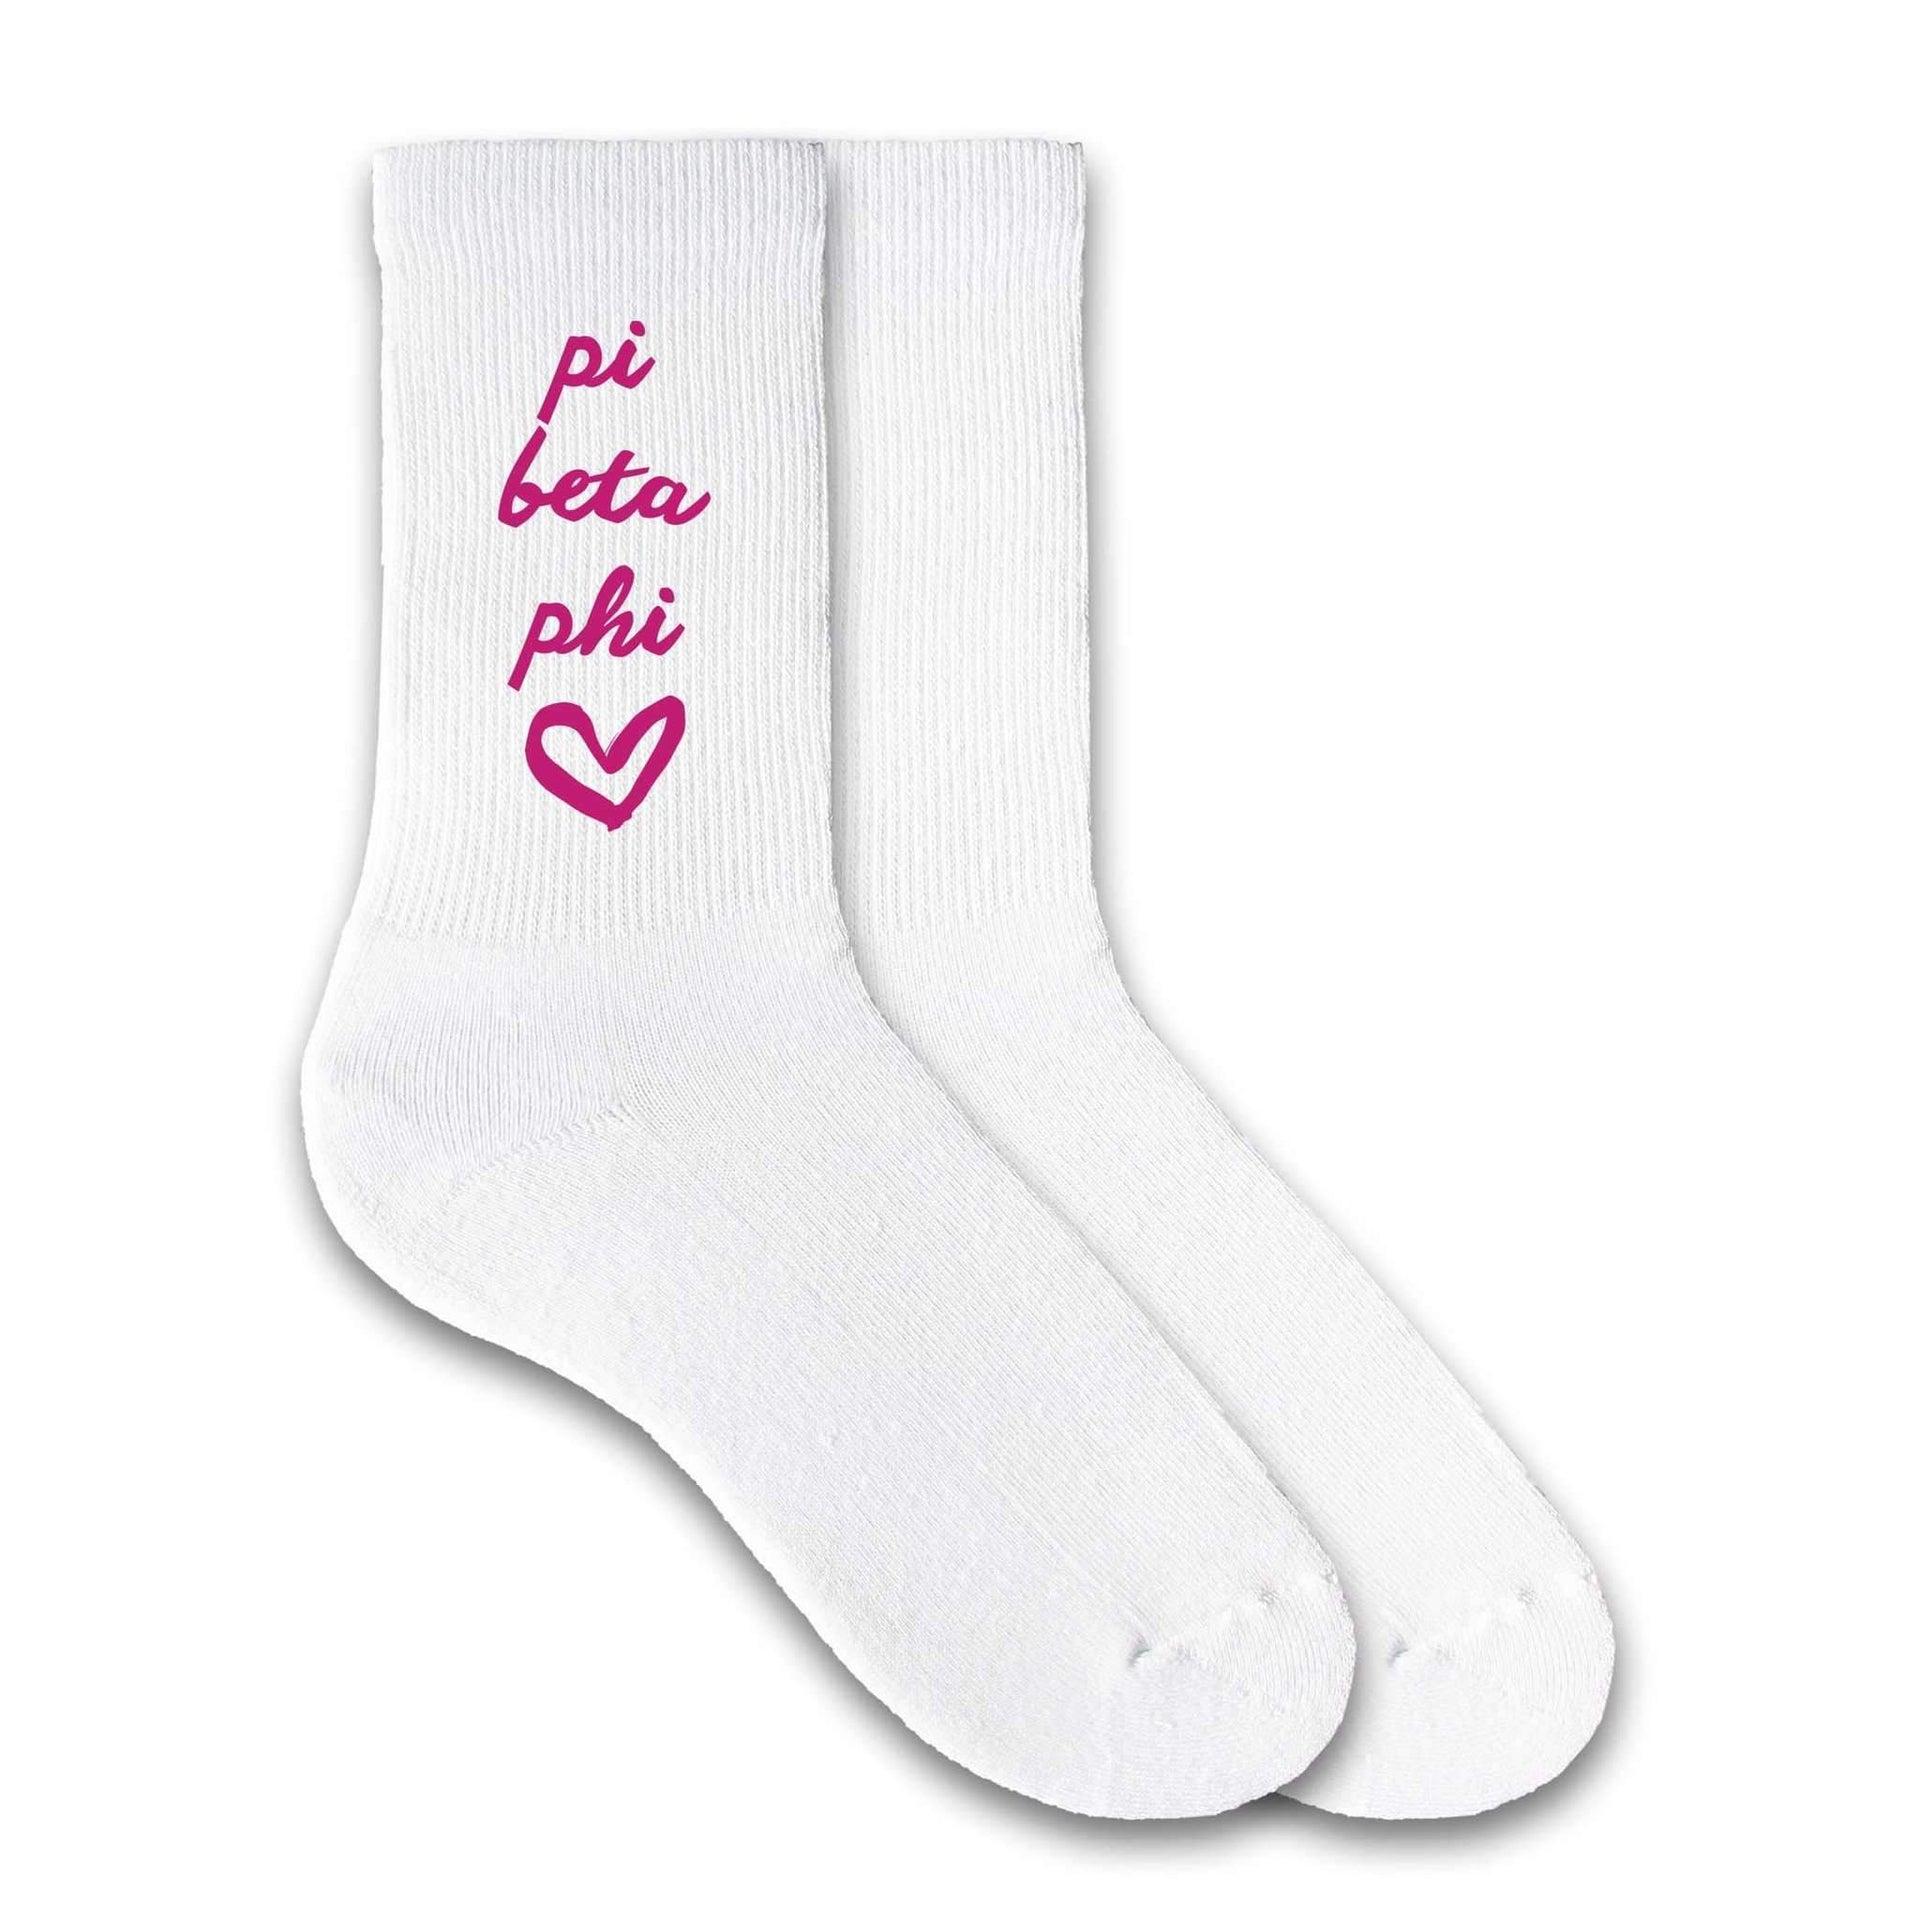 Pi Beta Phi sorority name with heart design custom printed on white cotton crew socks